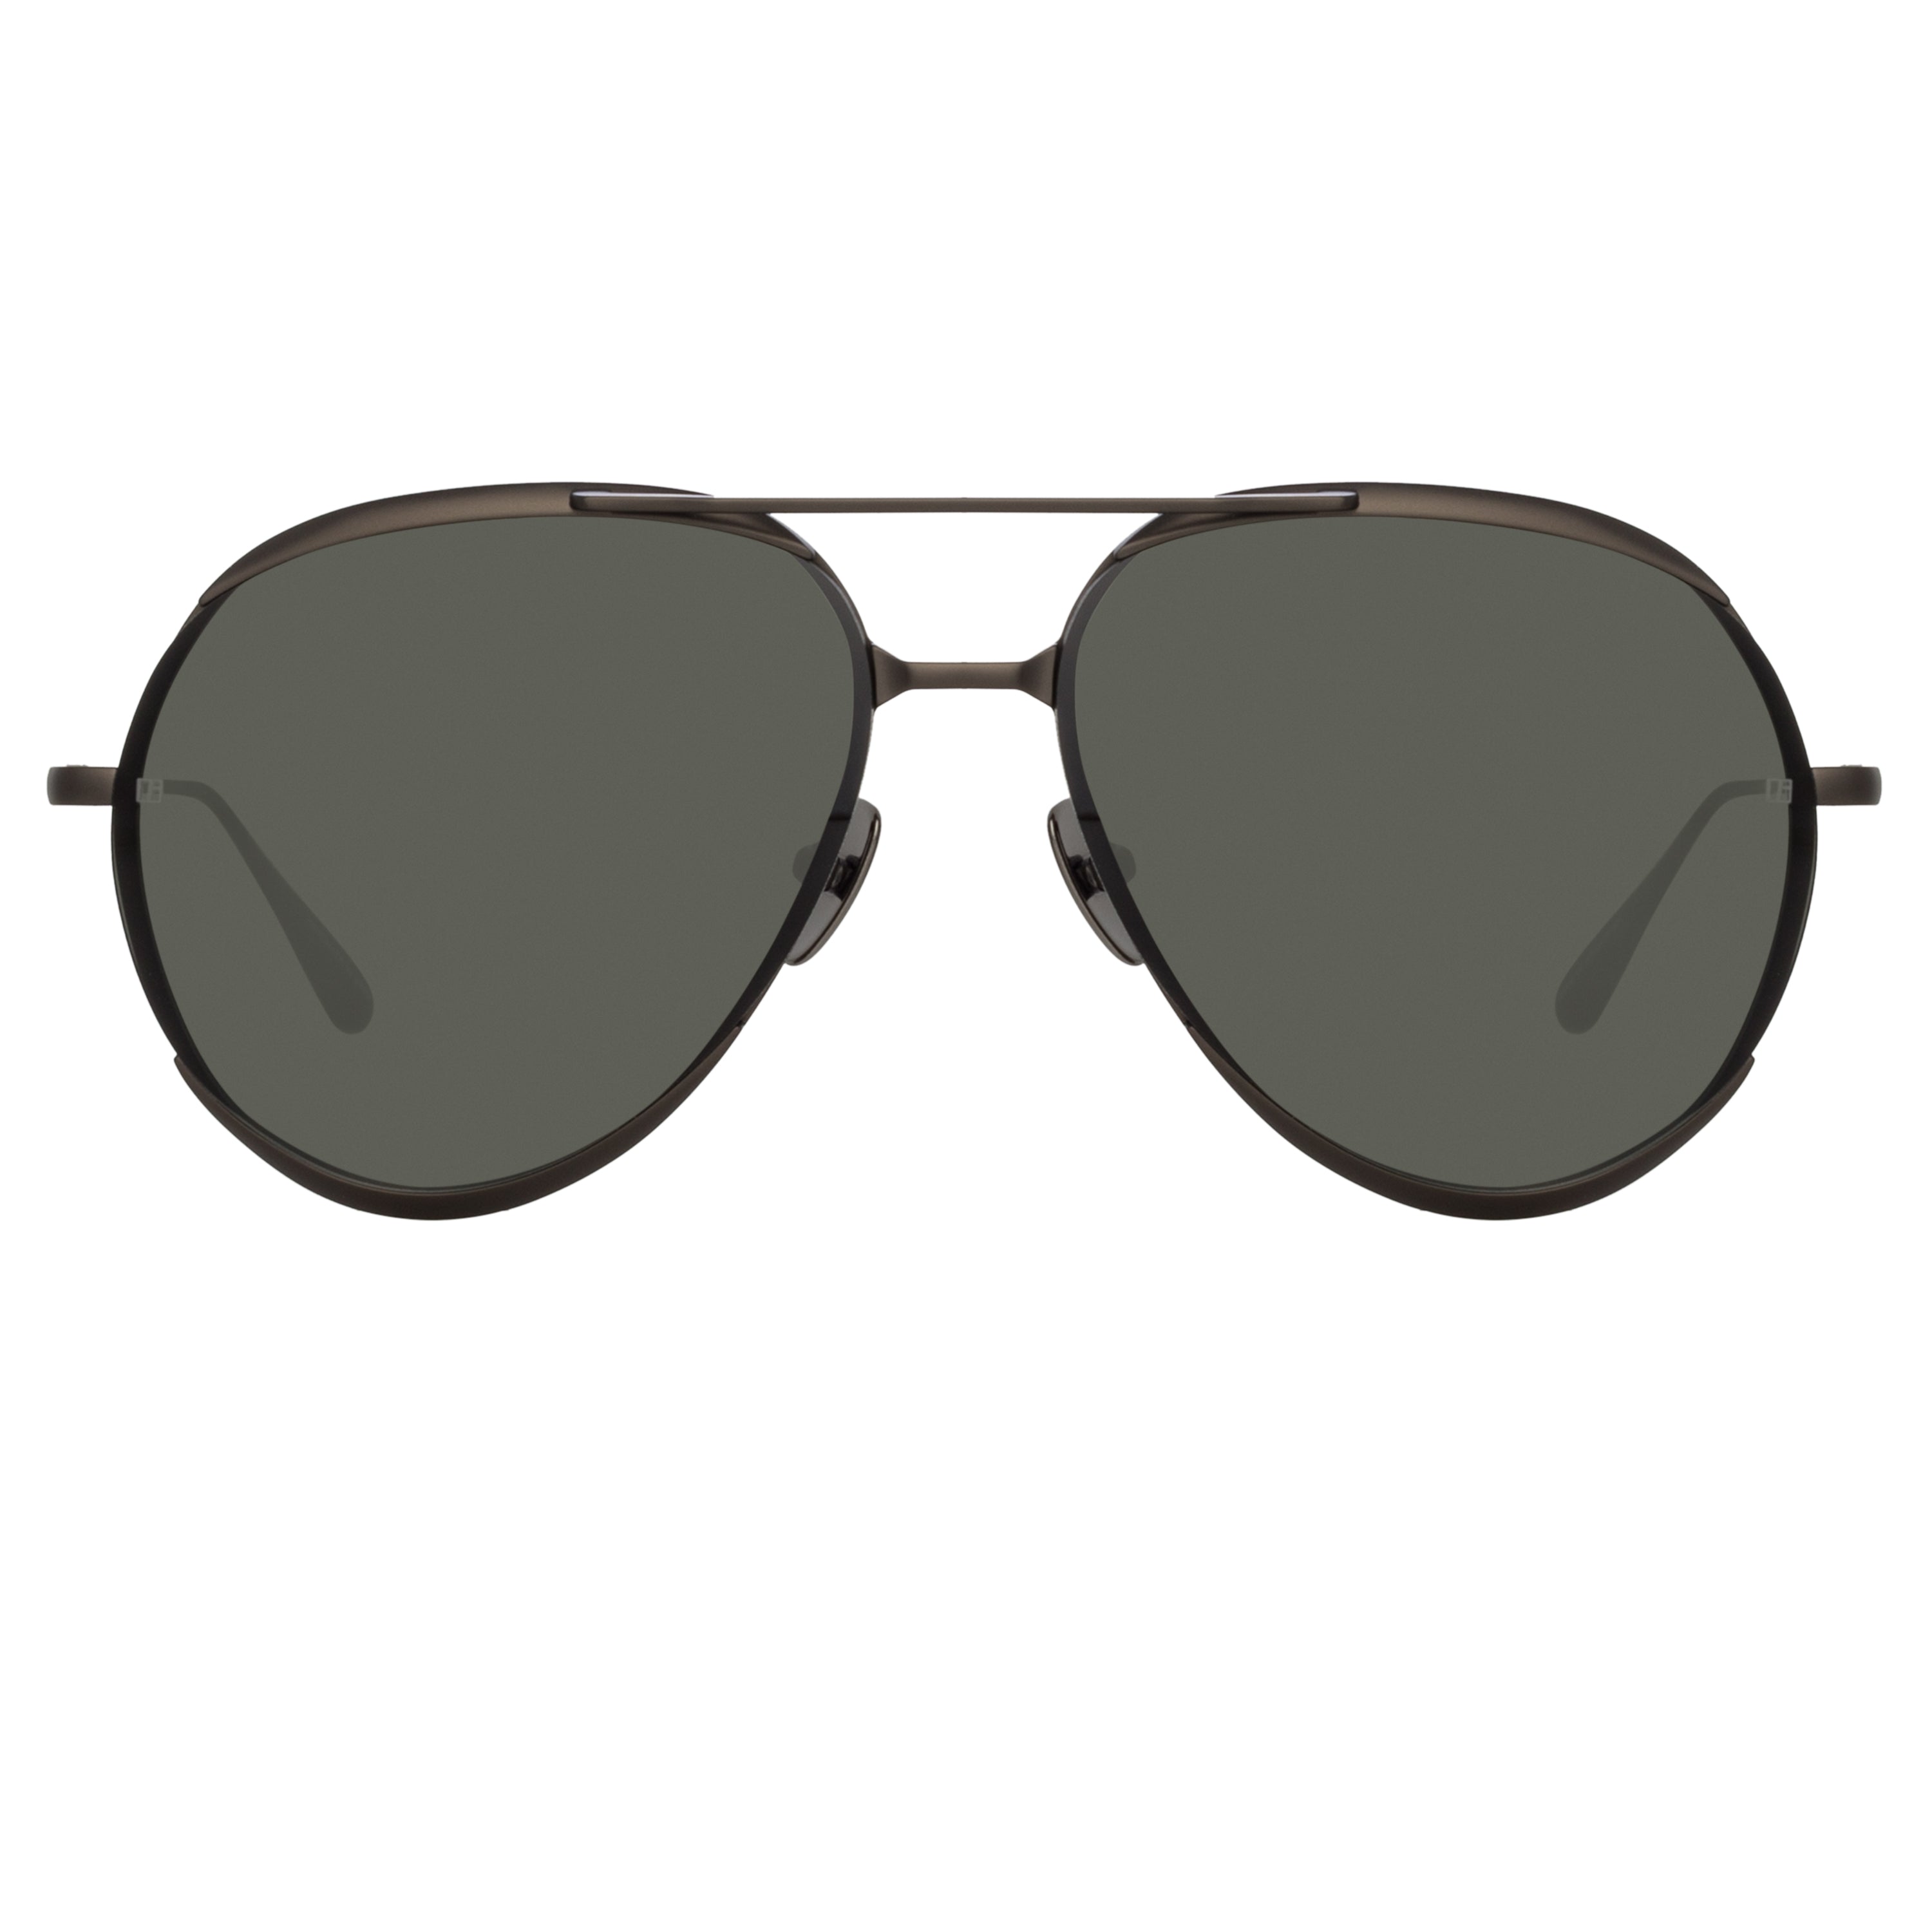 Men’s Matisse Aviator Sunglasses in Nickel